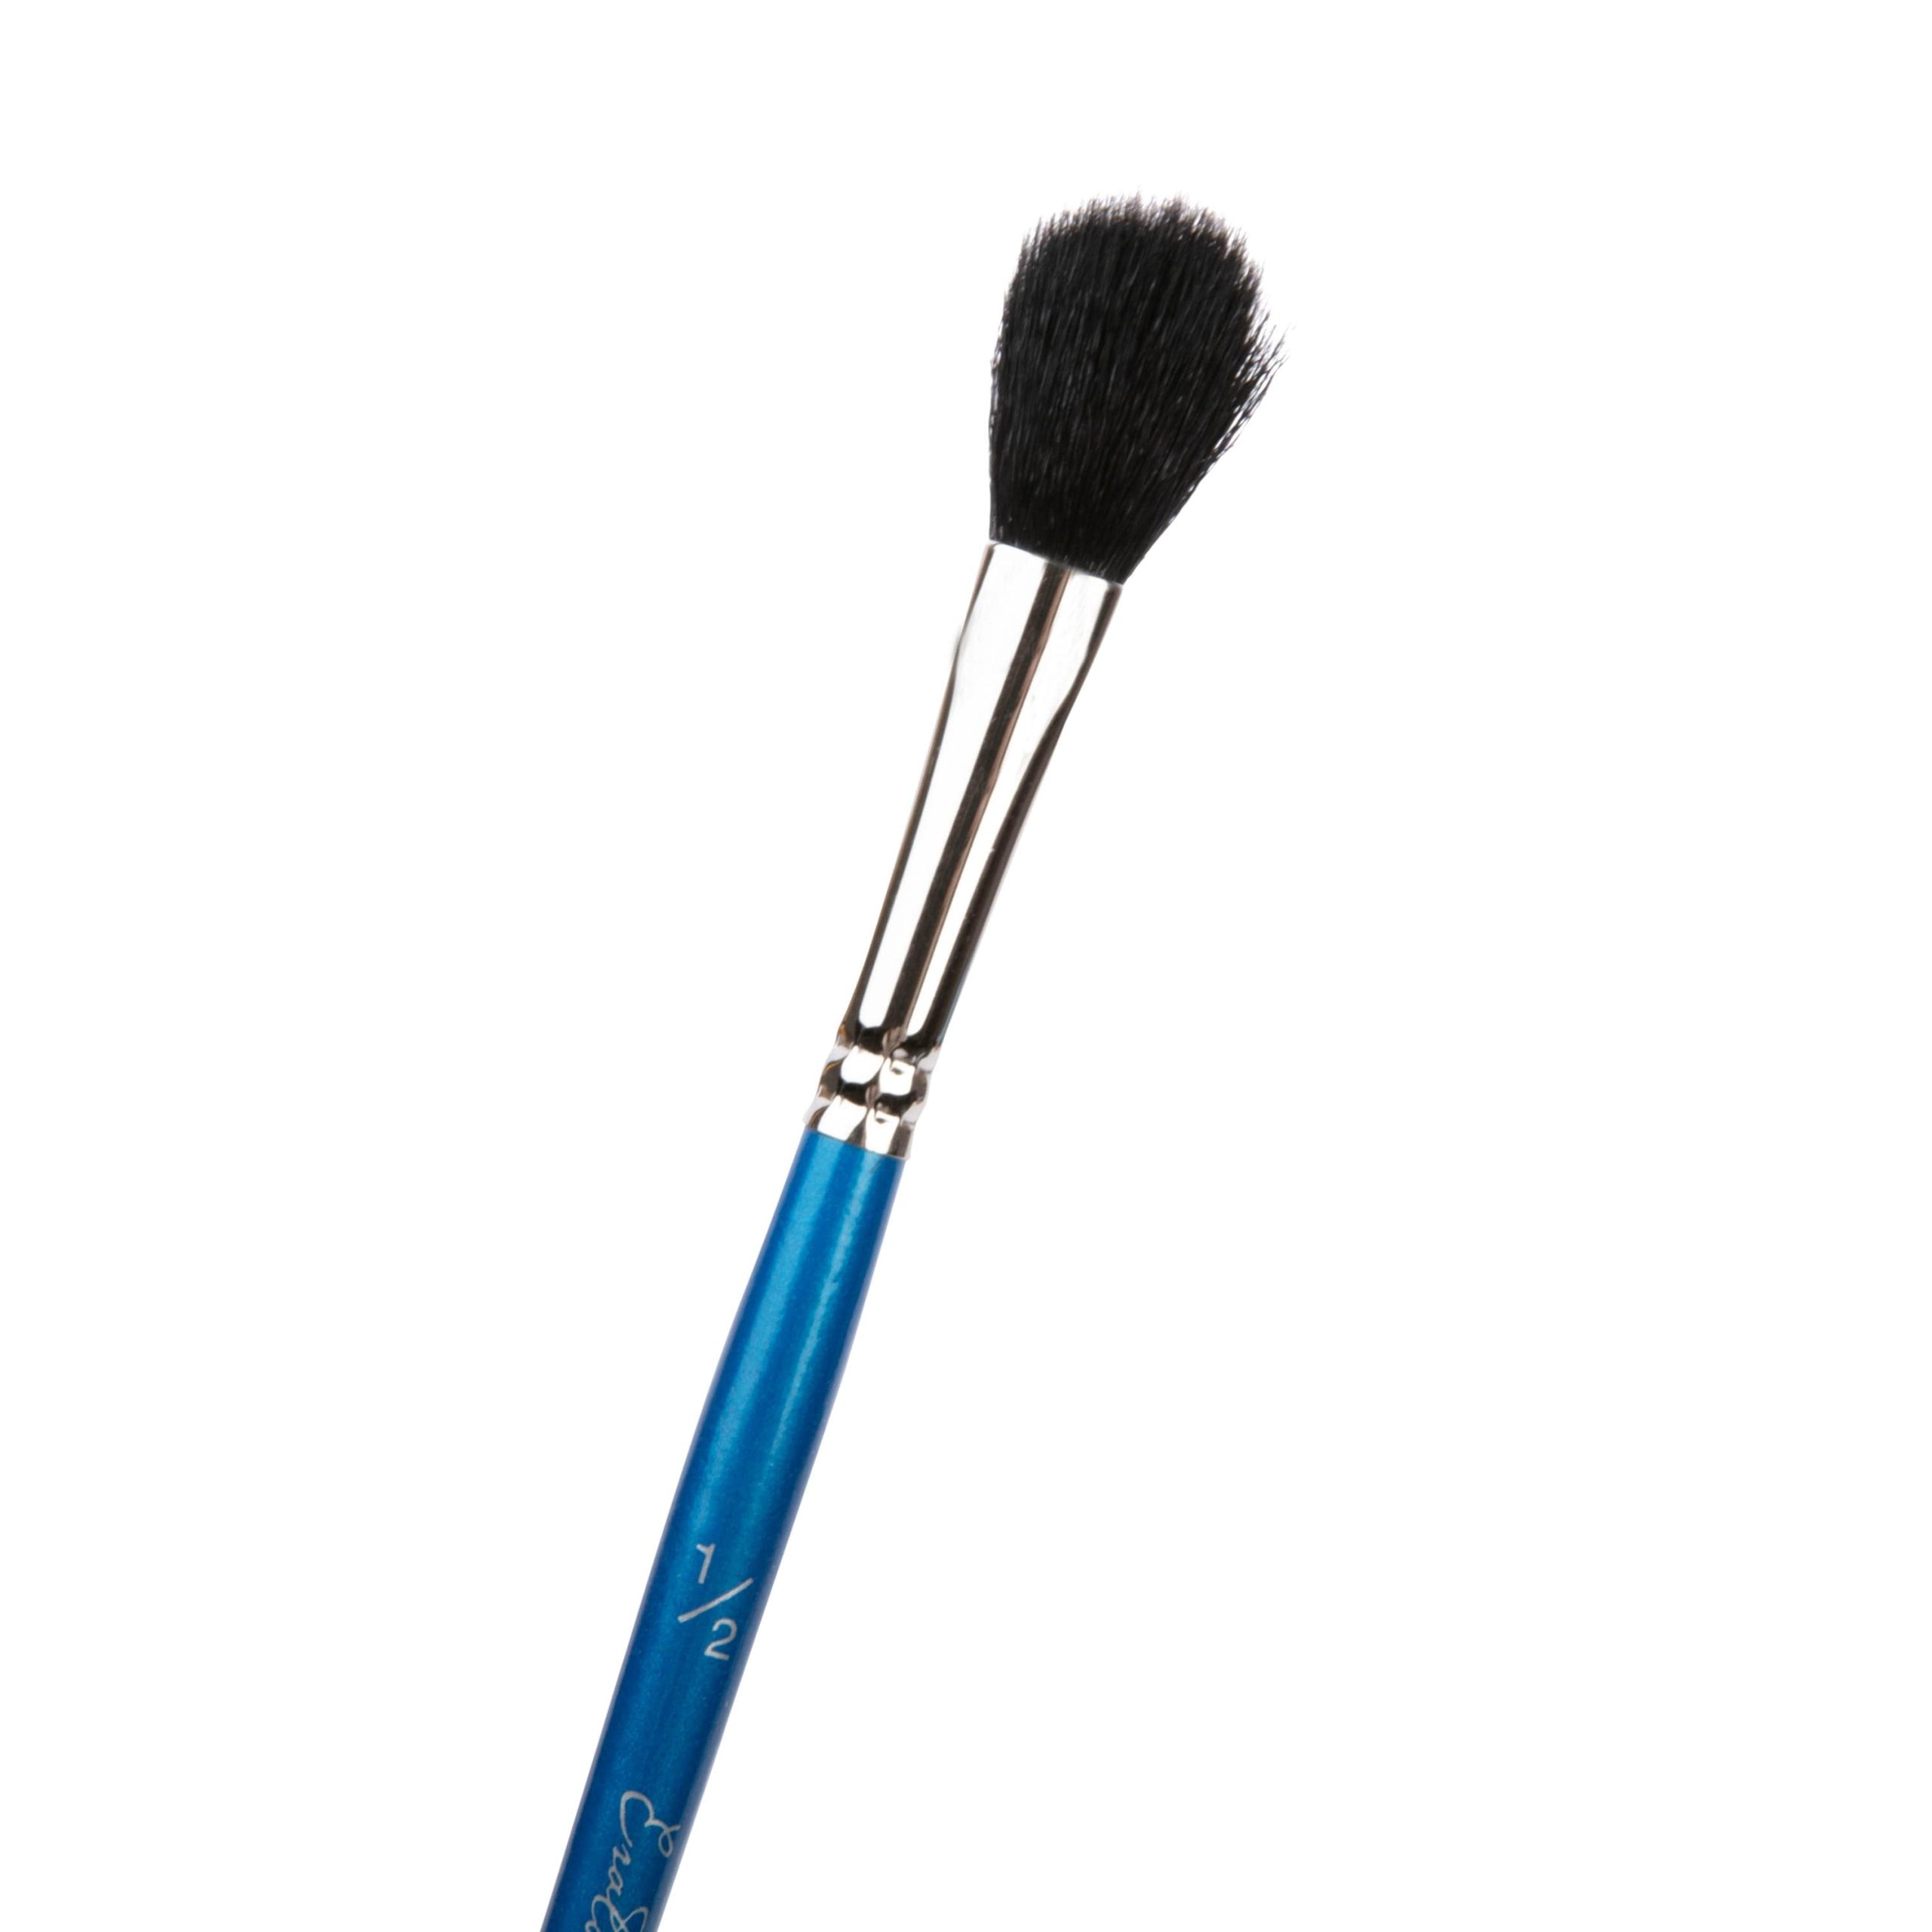 Chels Made Paint Brush - Mop